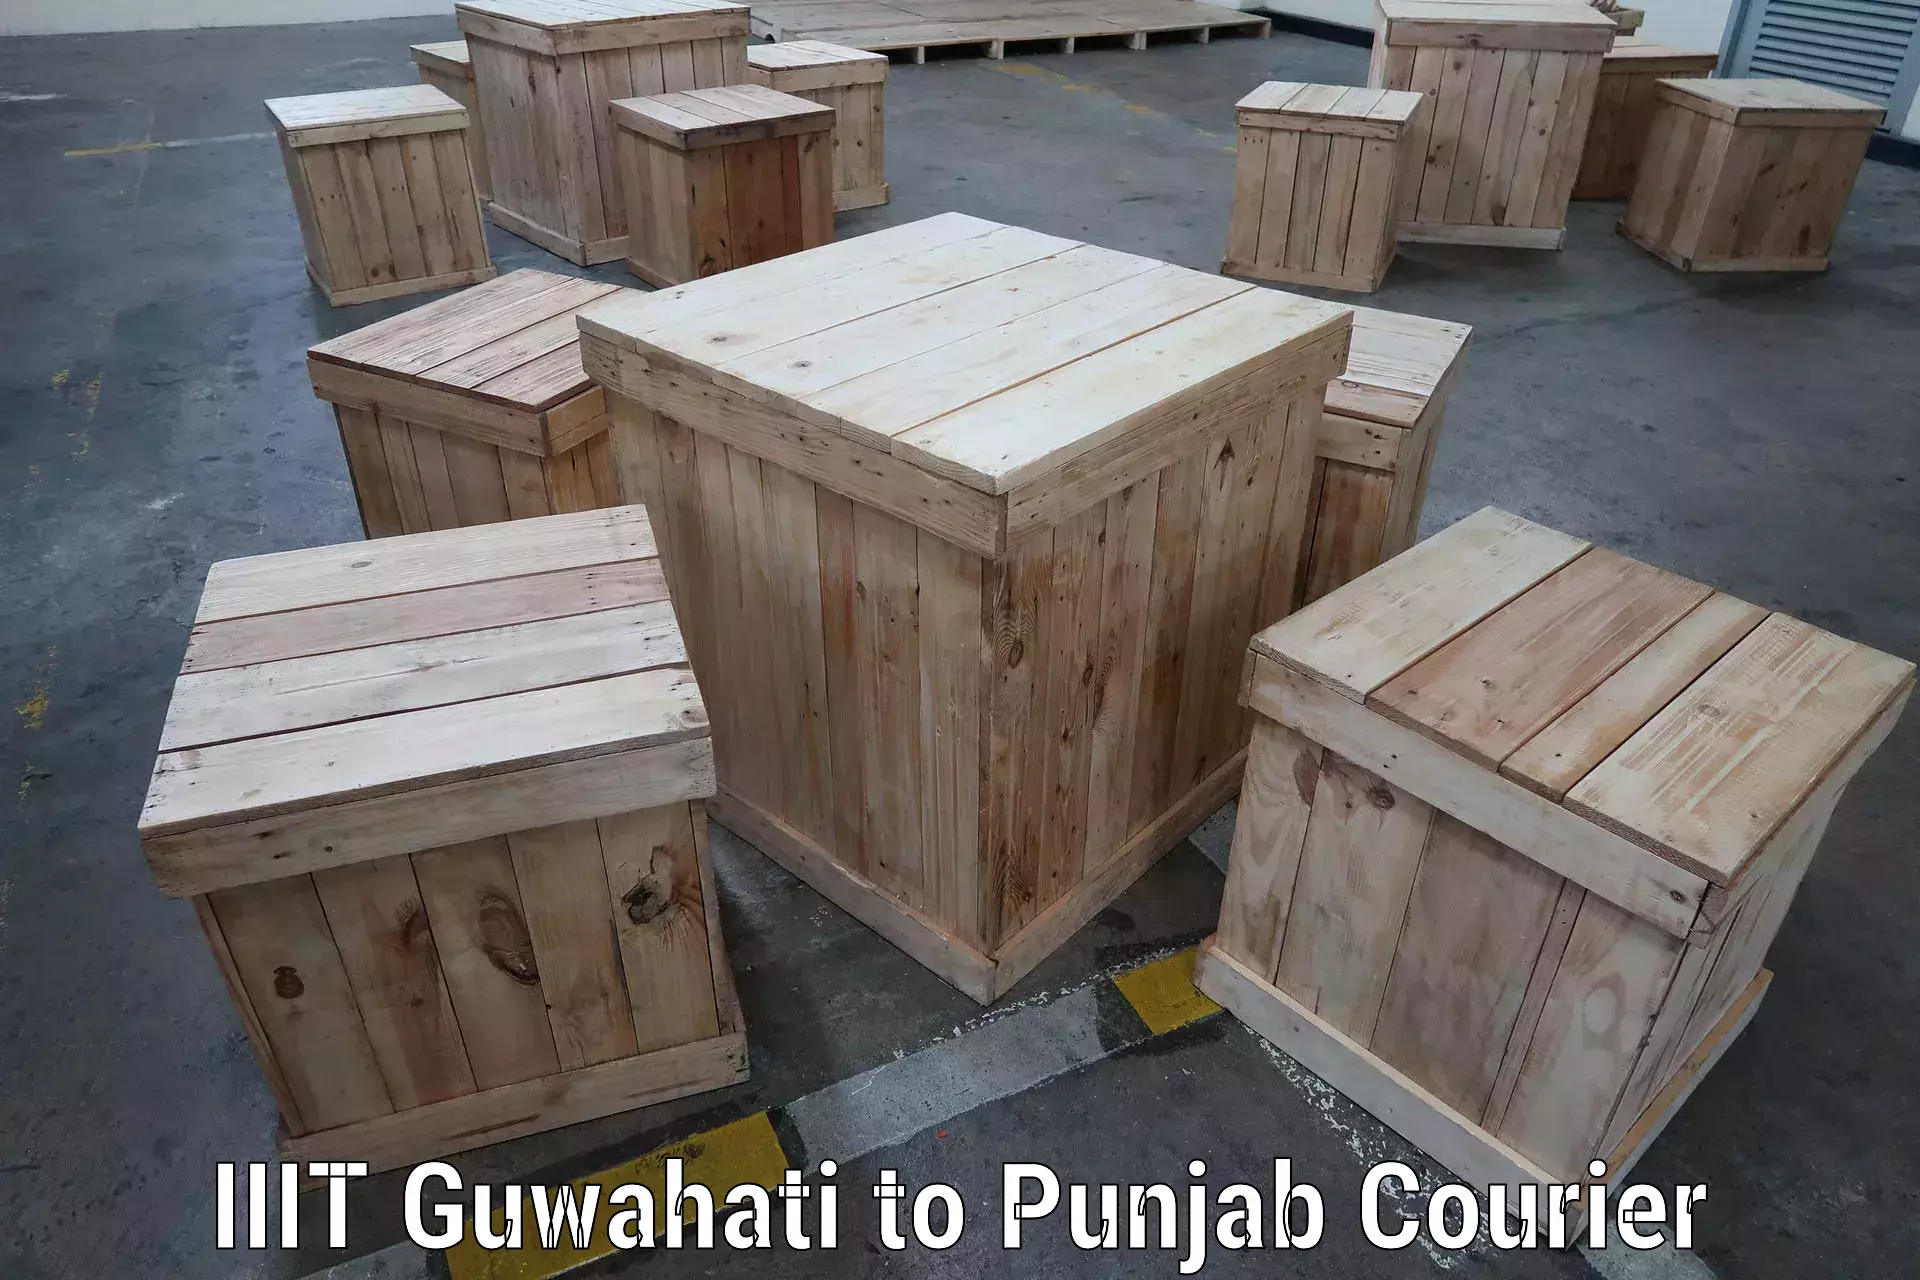 On-demand shipping options IIIT Guwahati to Amritsar